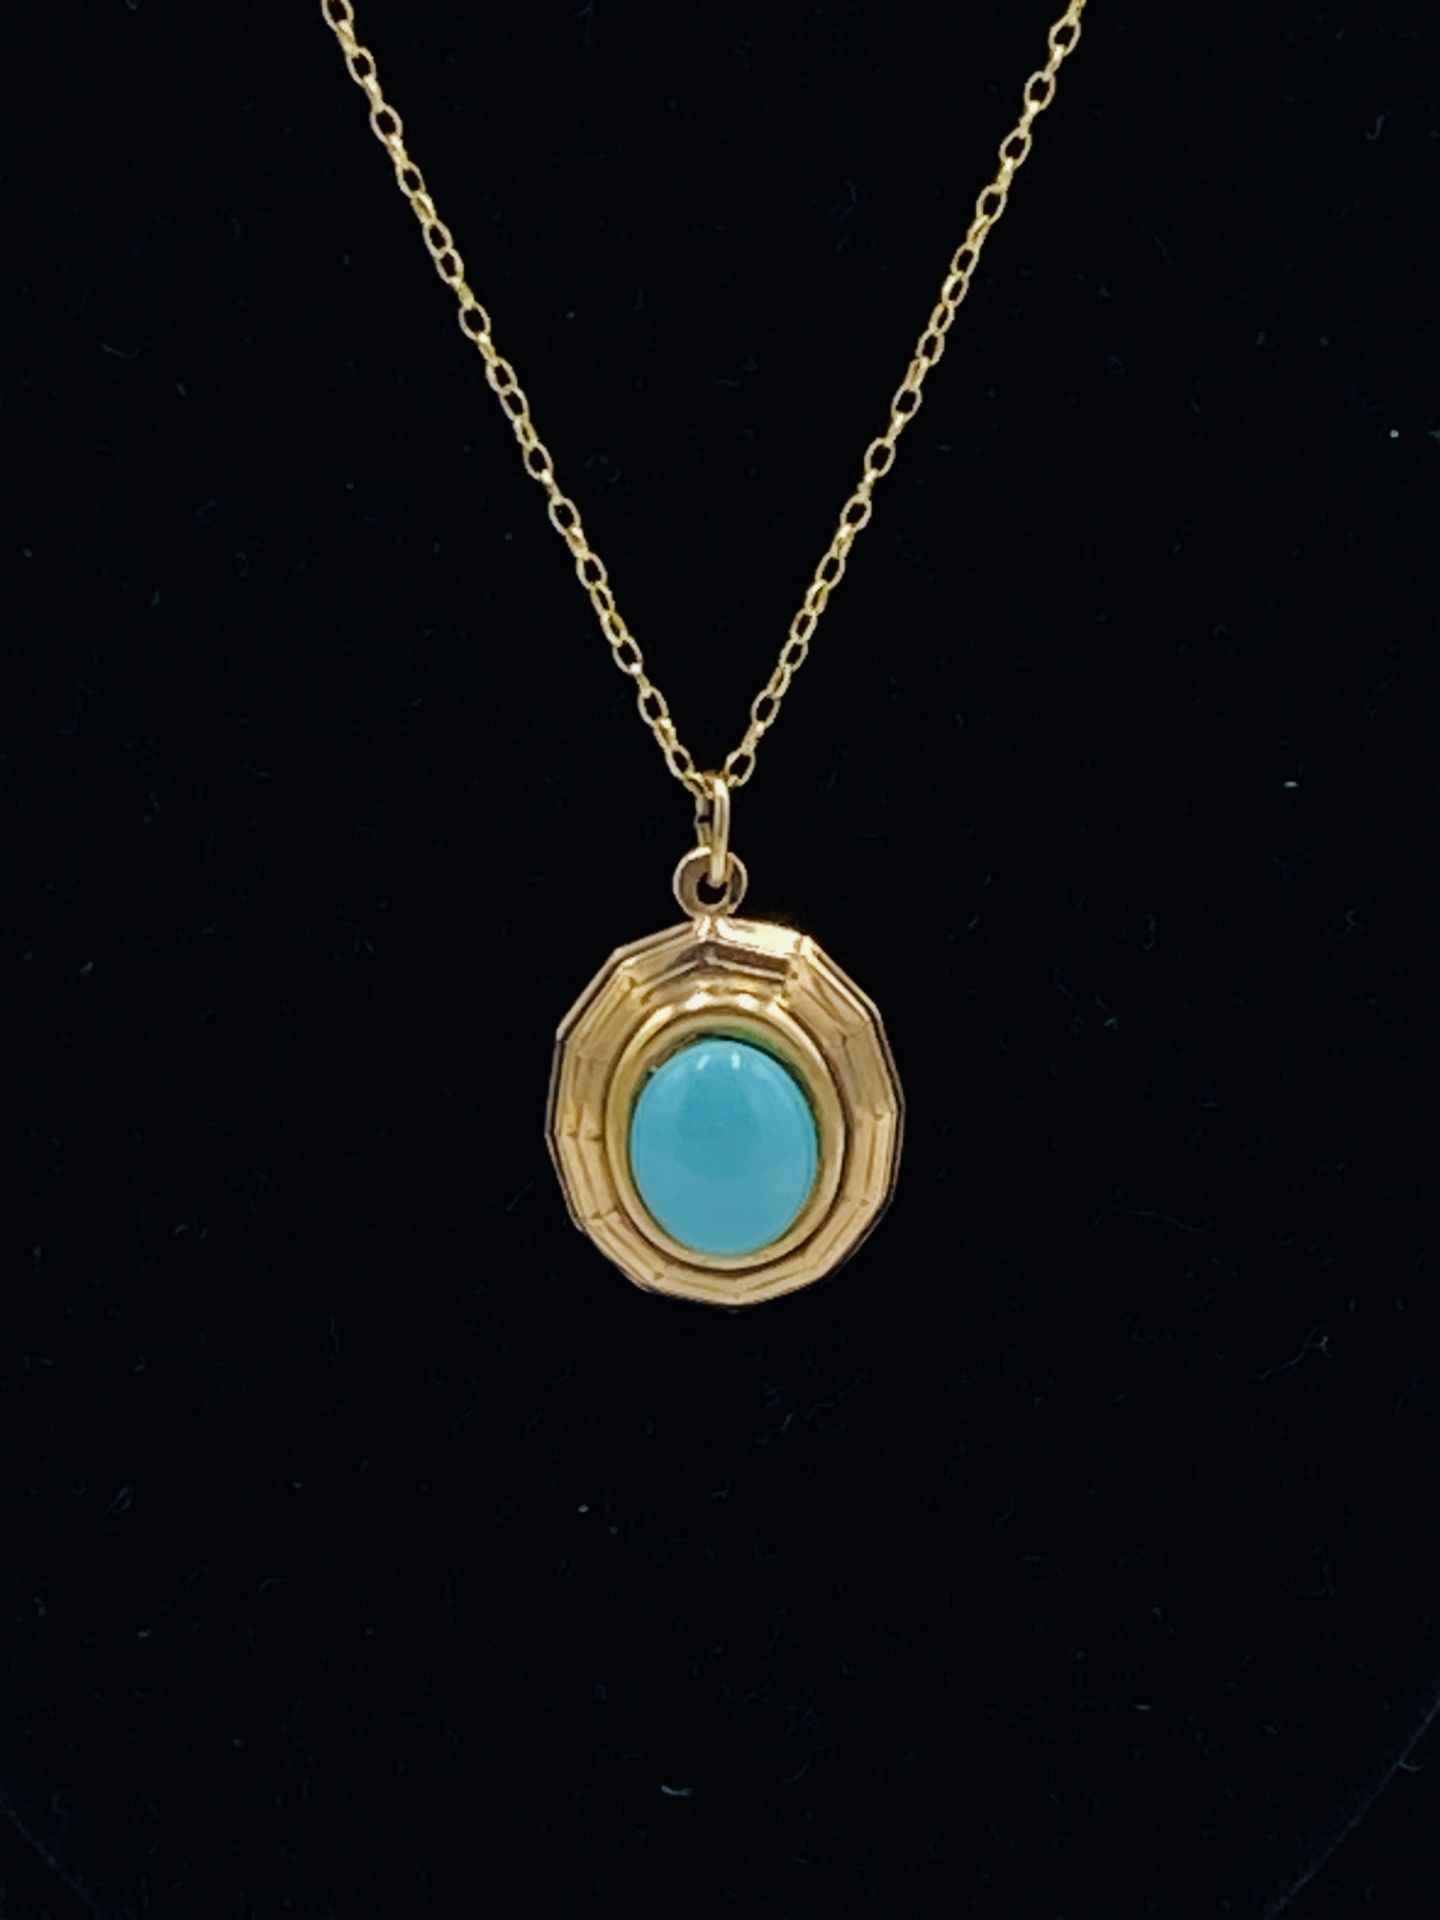 9ct gold necklace with turquoise stone pendant - Bild 3 aus 4